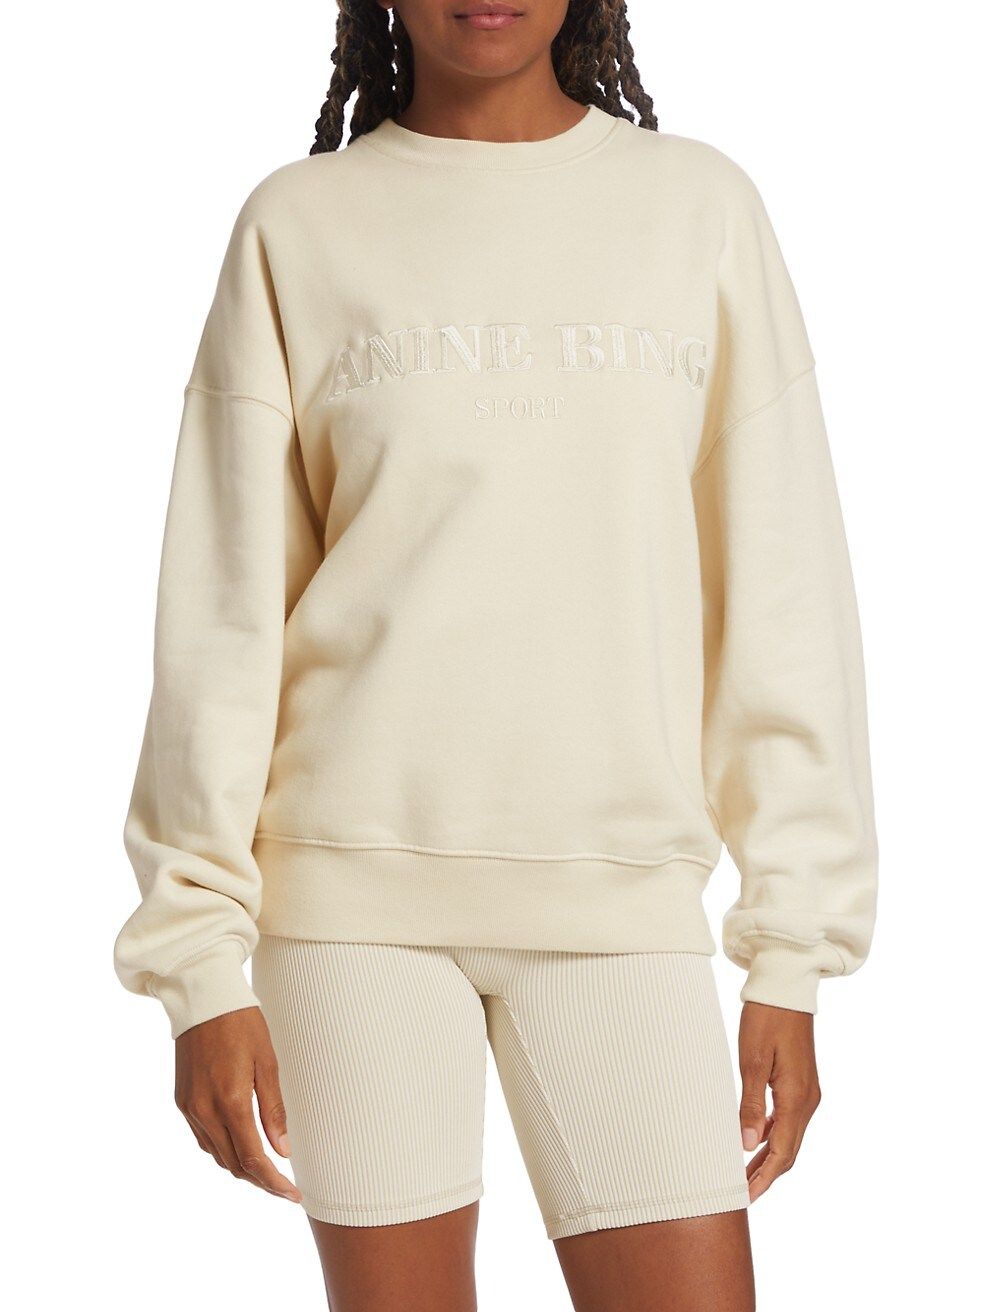 ANINE BING Evan Embroidered Logo Sweatshirt | Saks Fifth Avenue